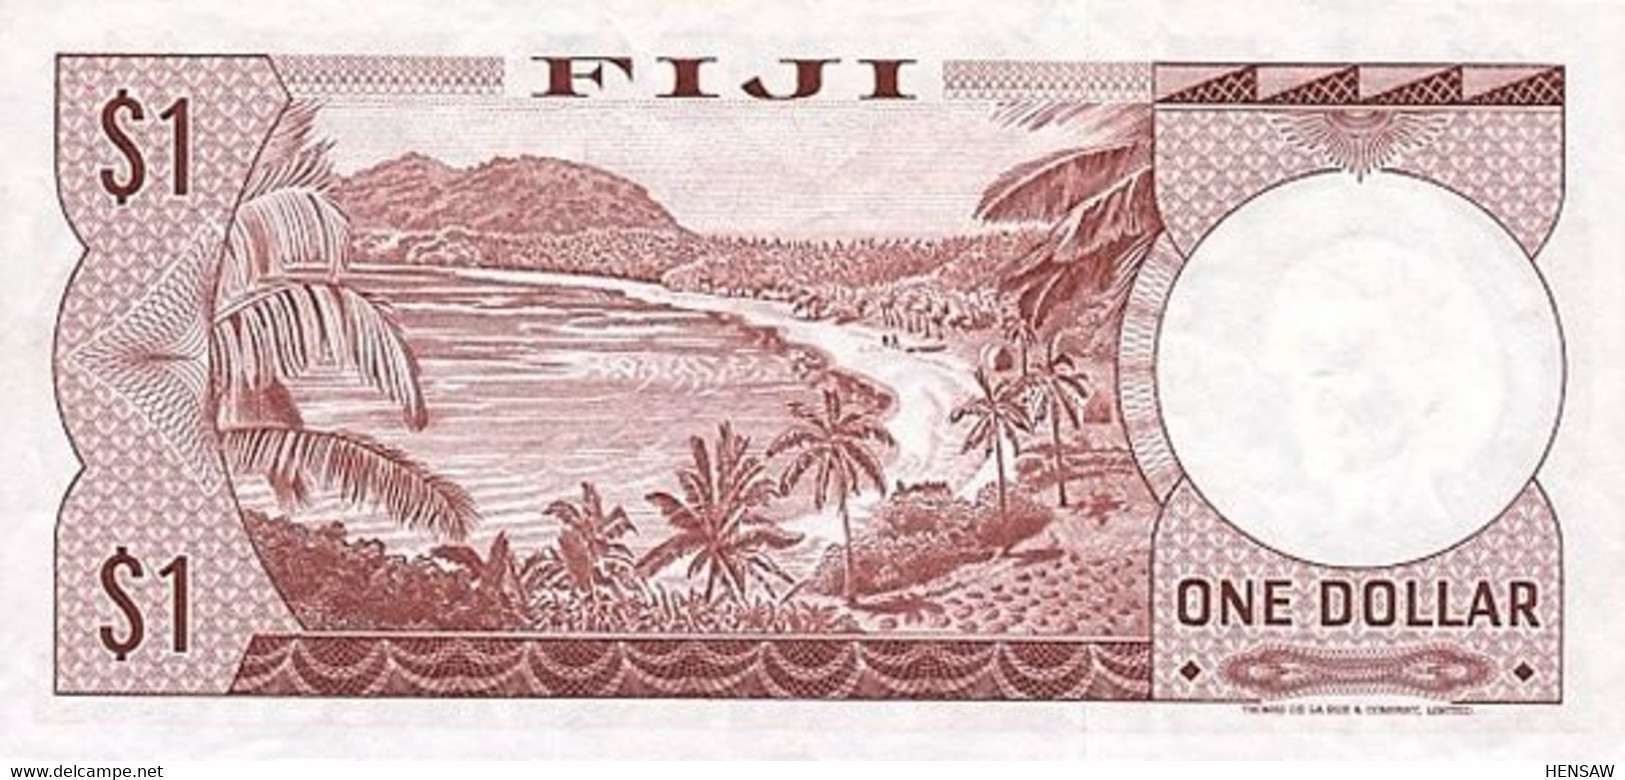 FIJI 1 DOLLAR 1974 P 71a UNC SC - Fiji